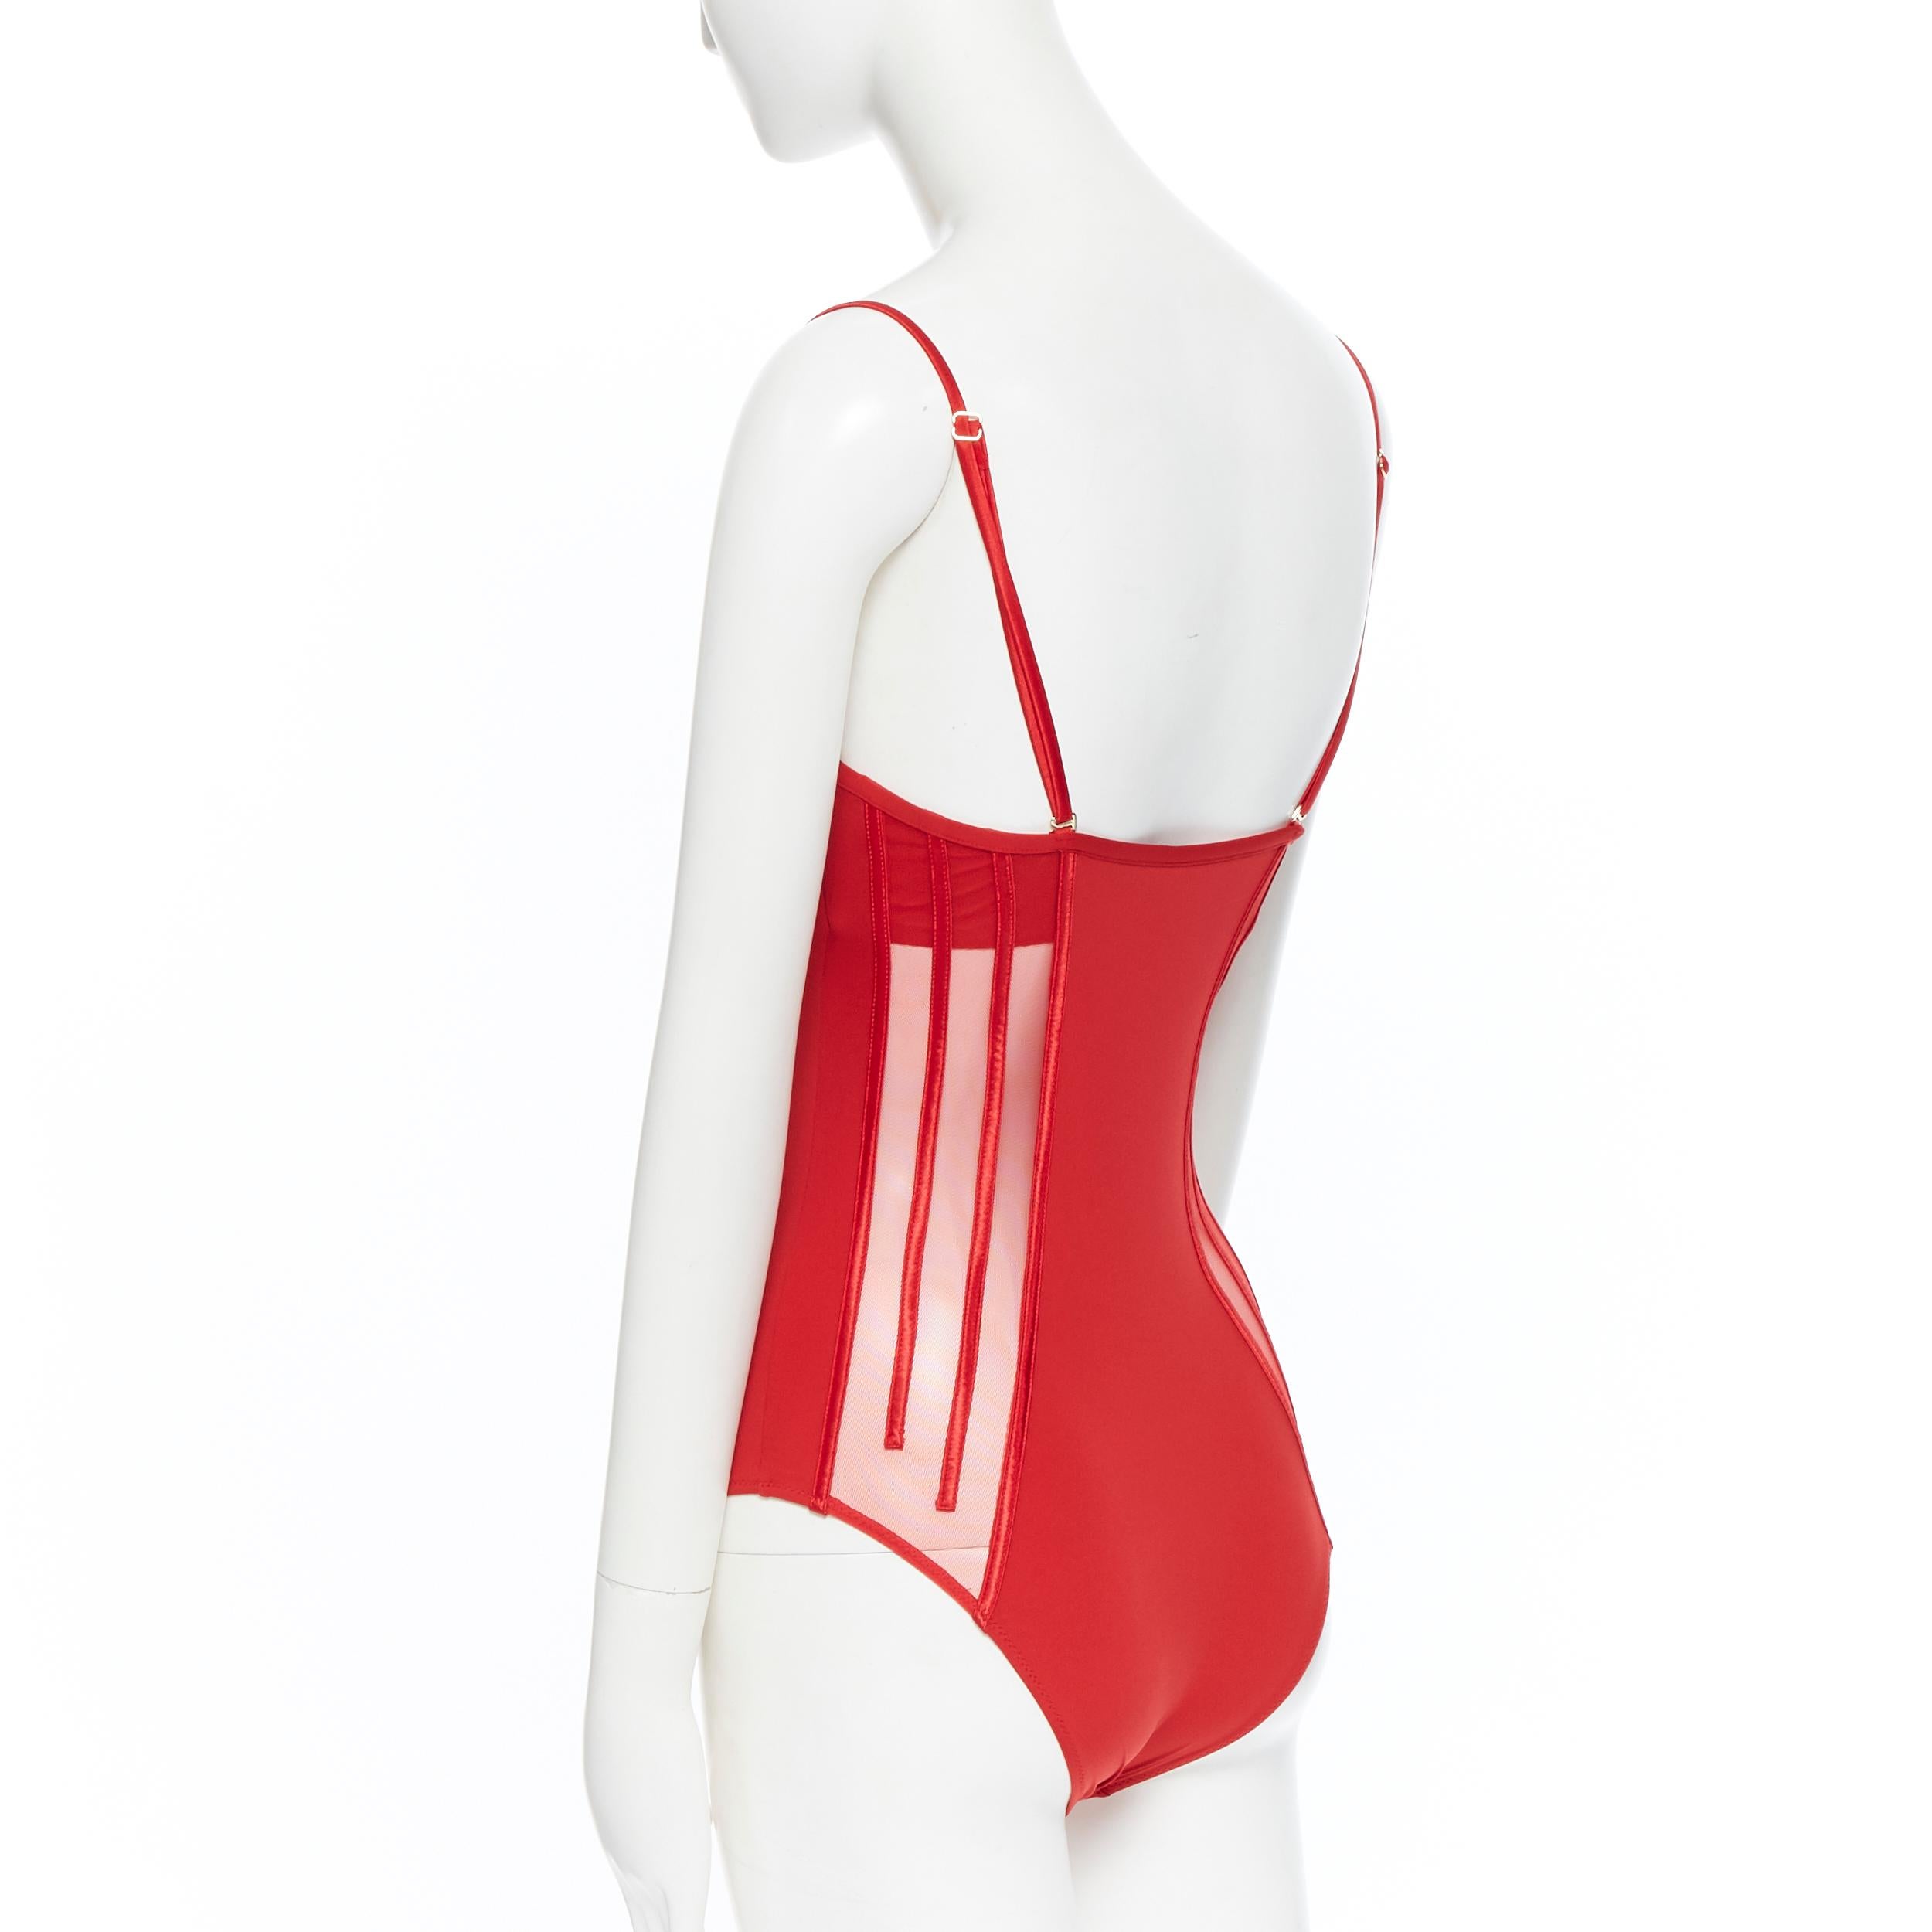 new LA PERLA Graphique Couture red boned sheer body monokini swimsuit IT44B M 2